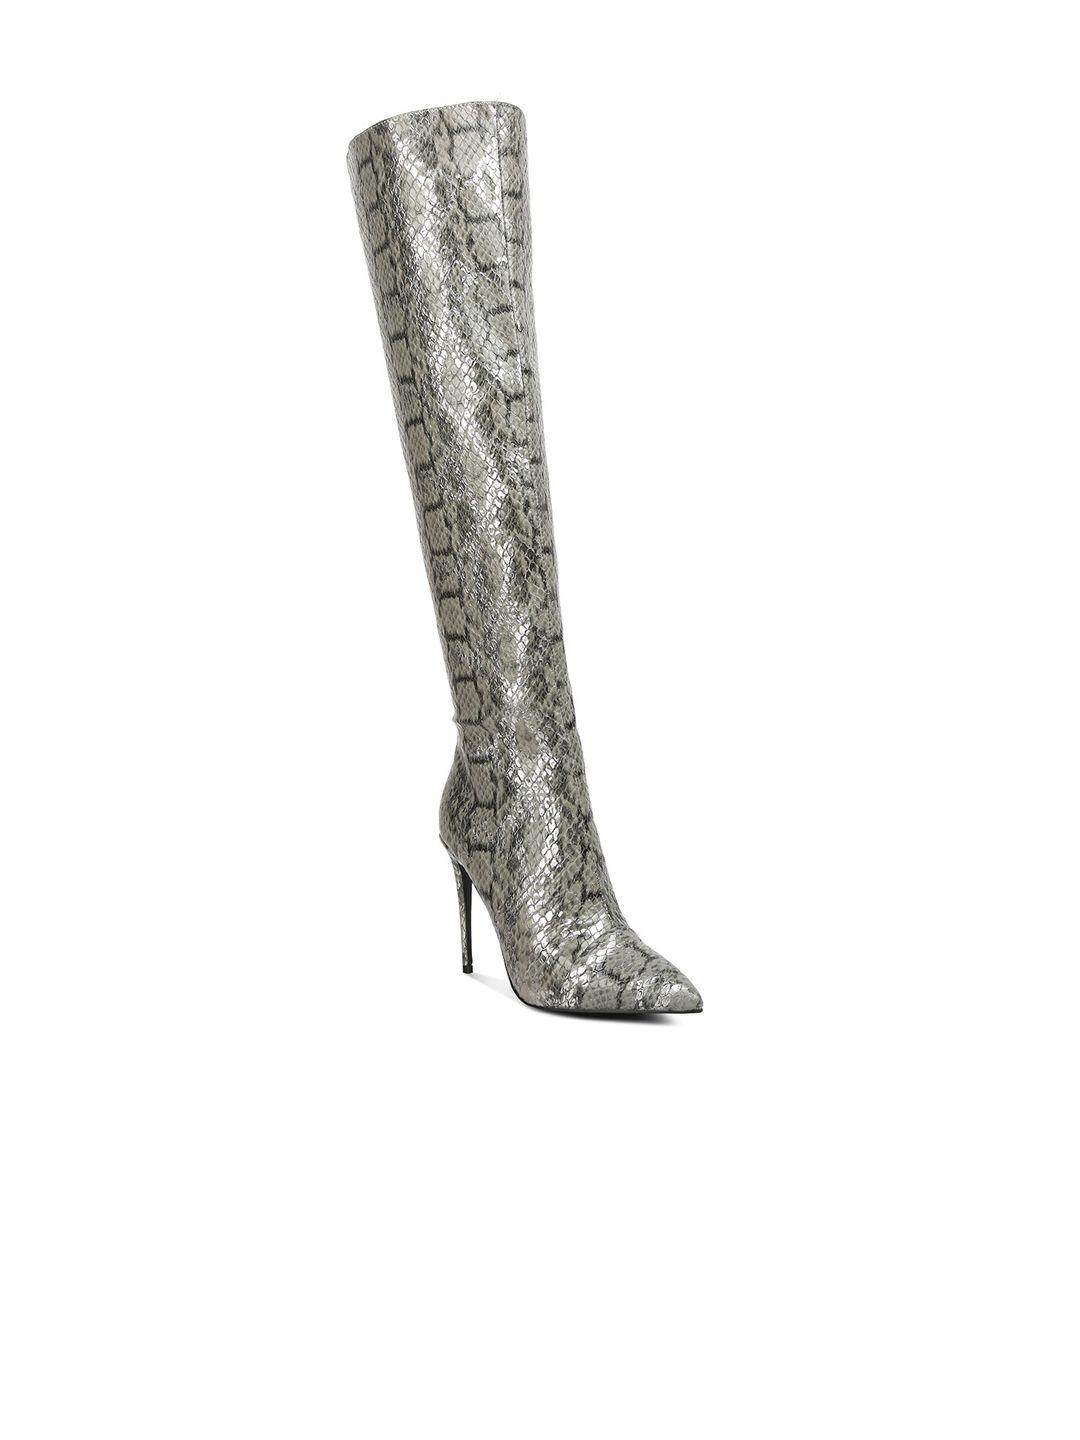 london-rag-women-snake-printed-stiletto-heel-high-top-boots